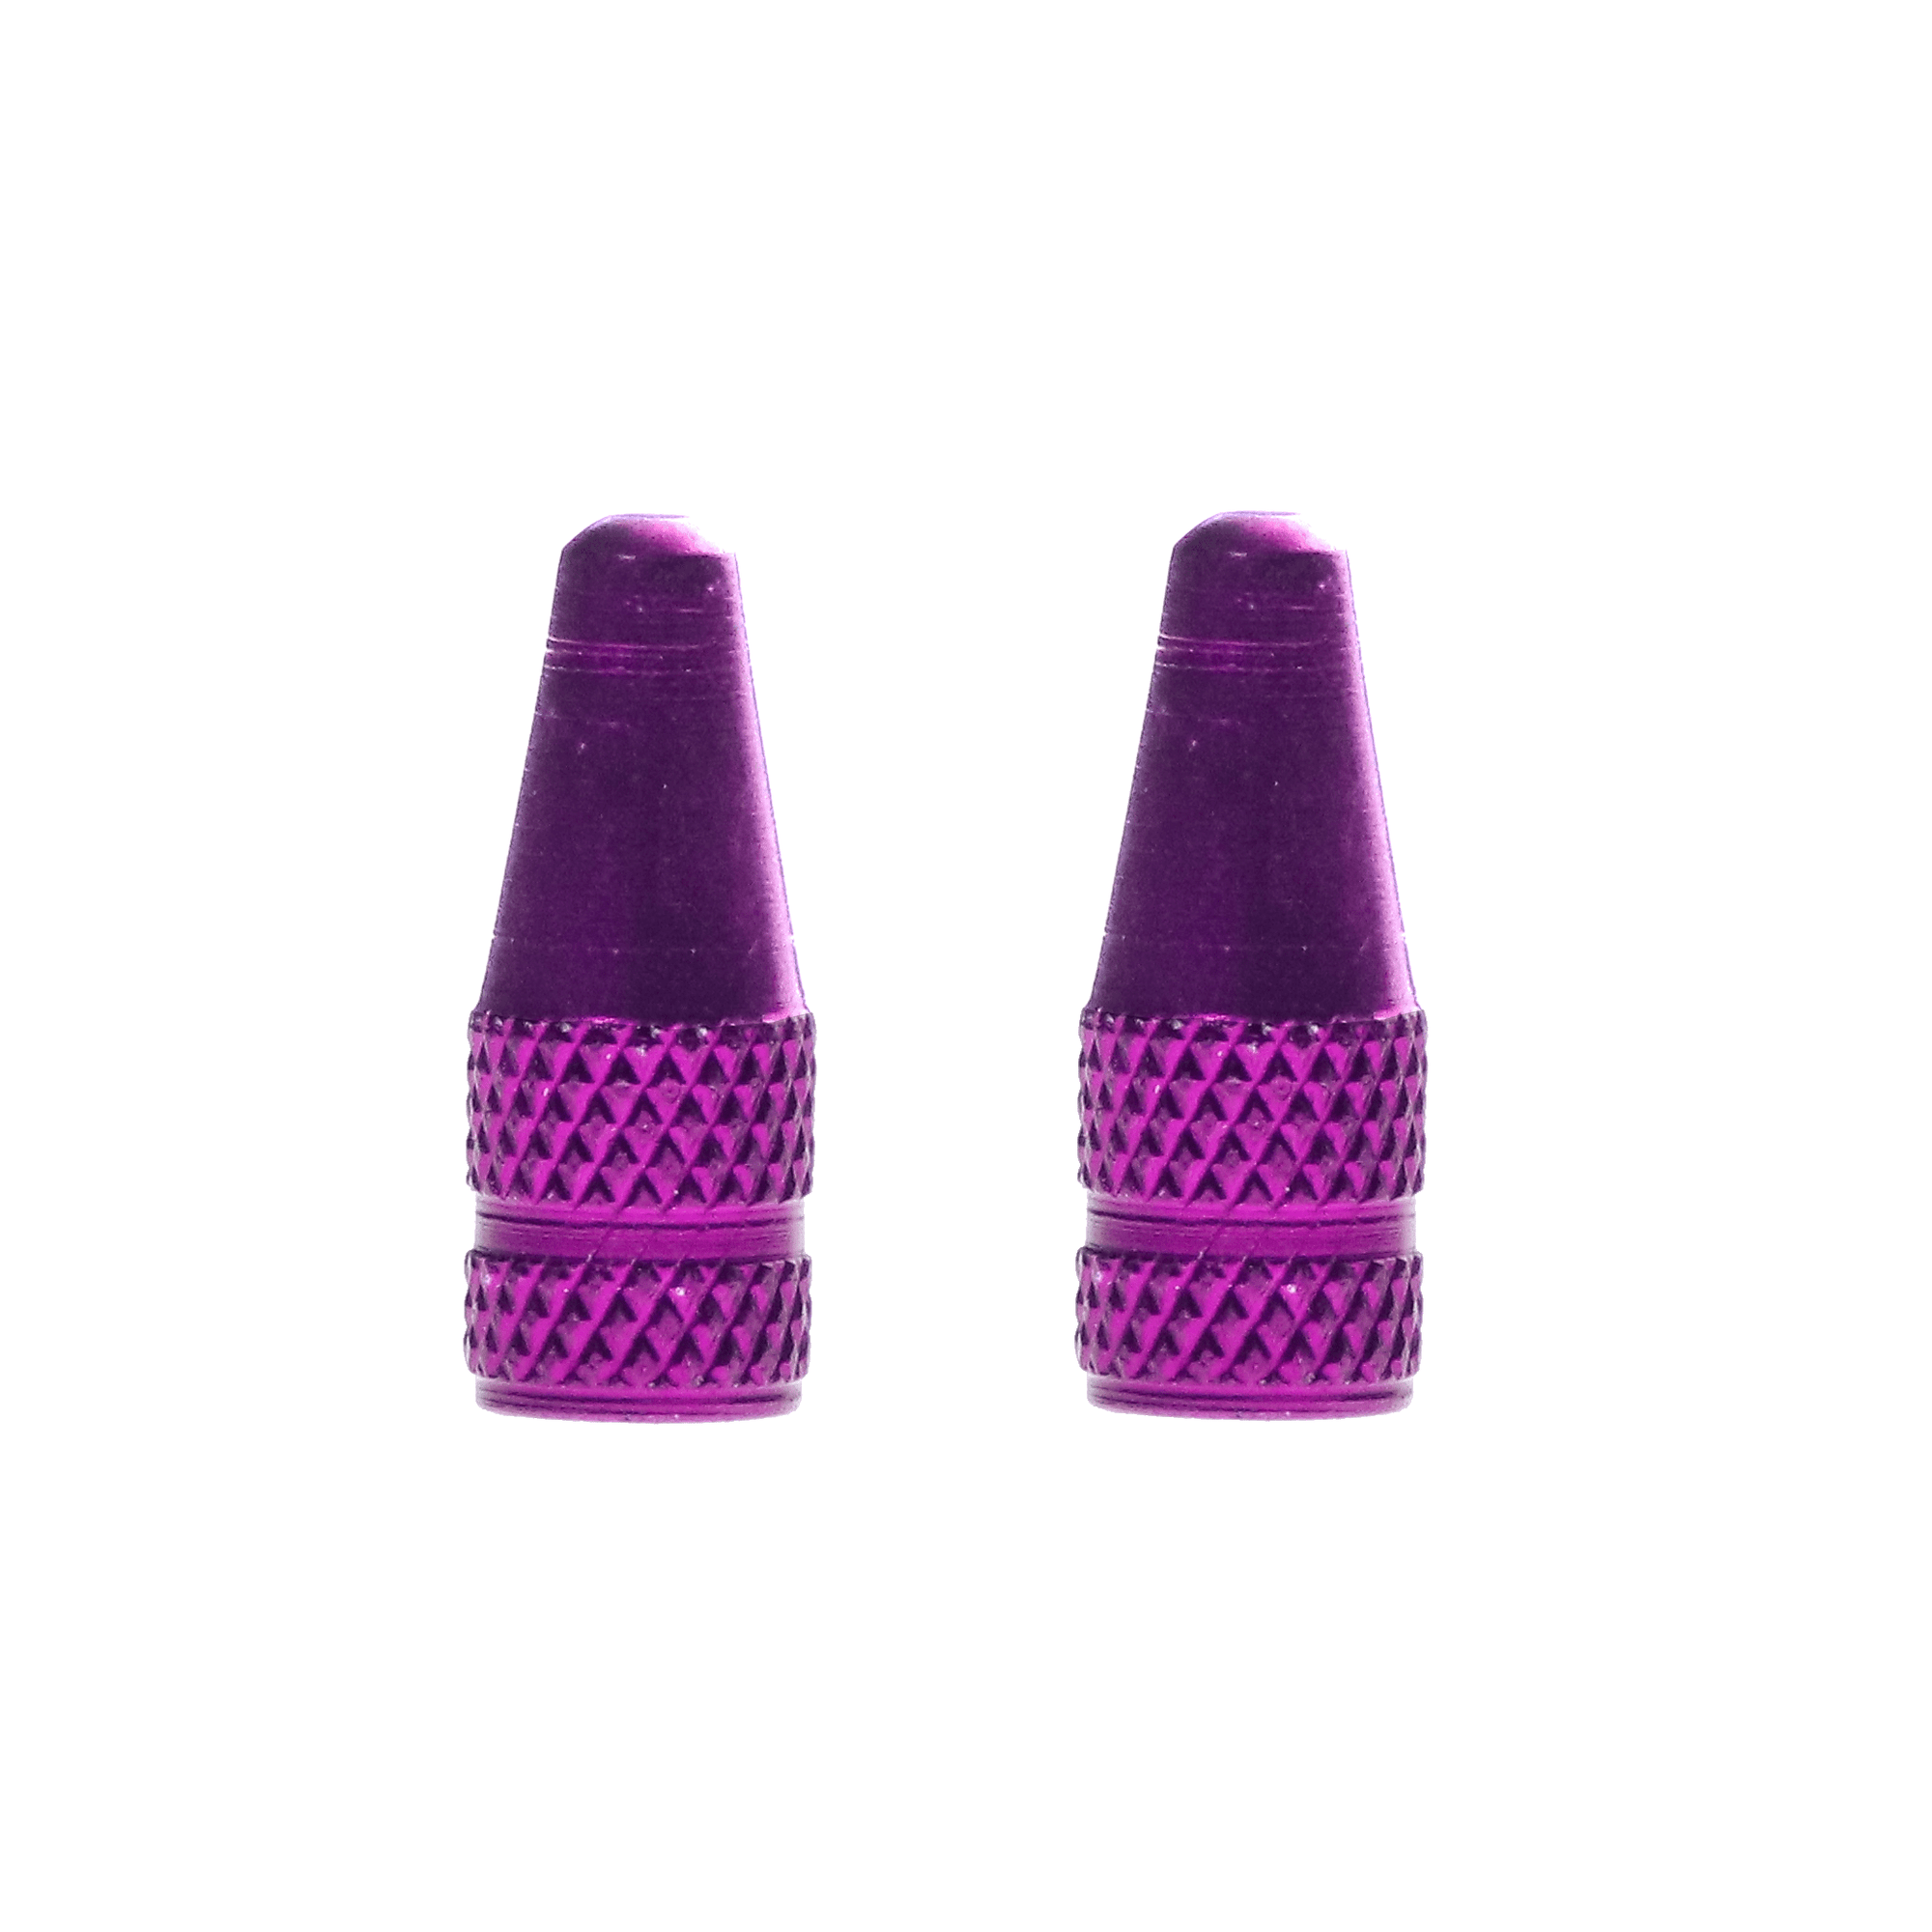 purple presta valve caps